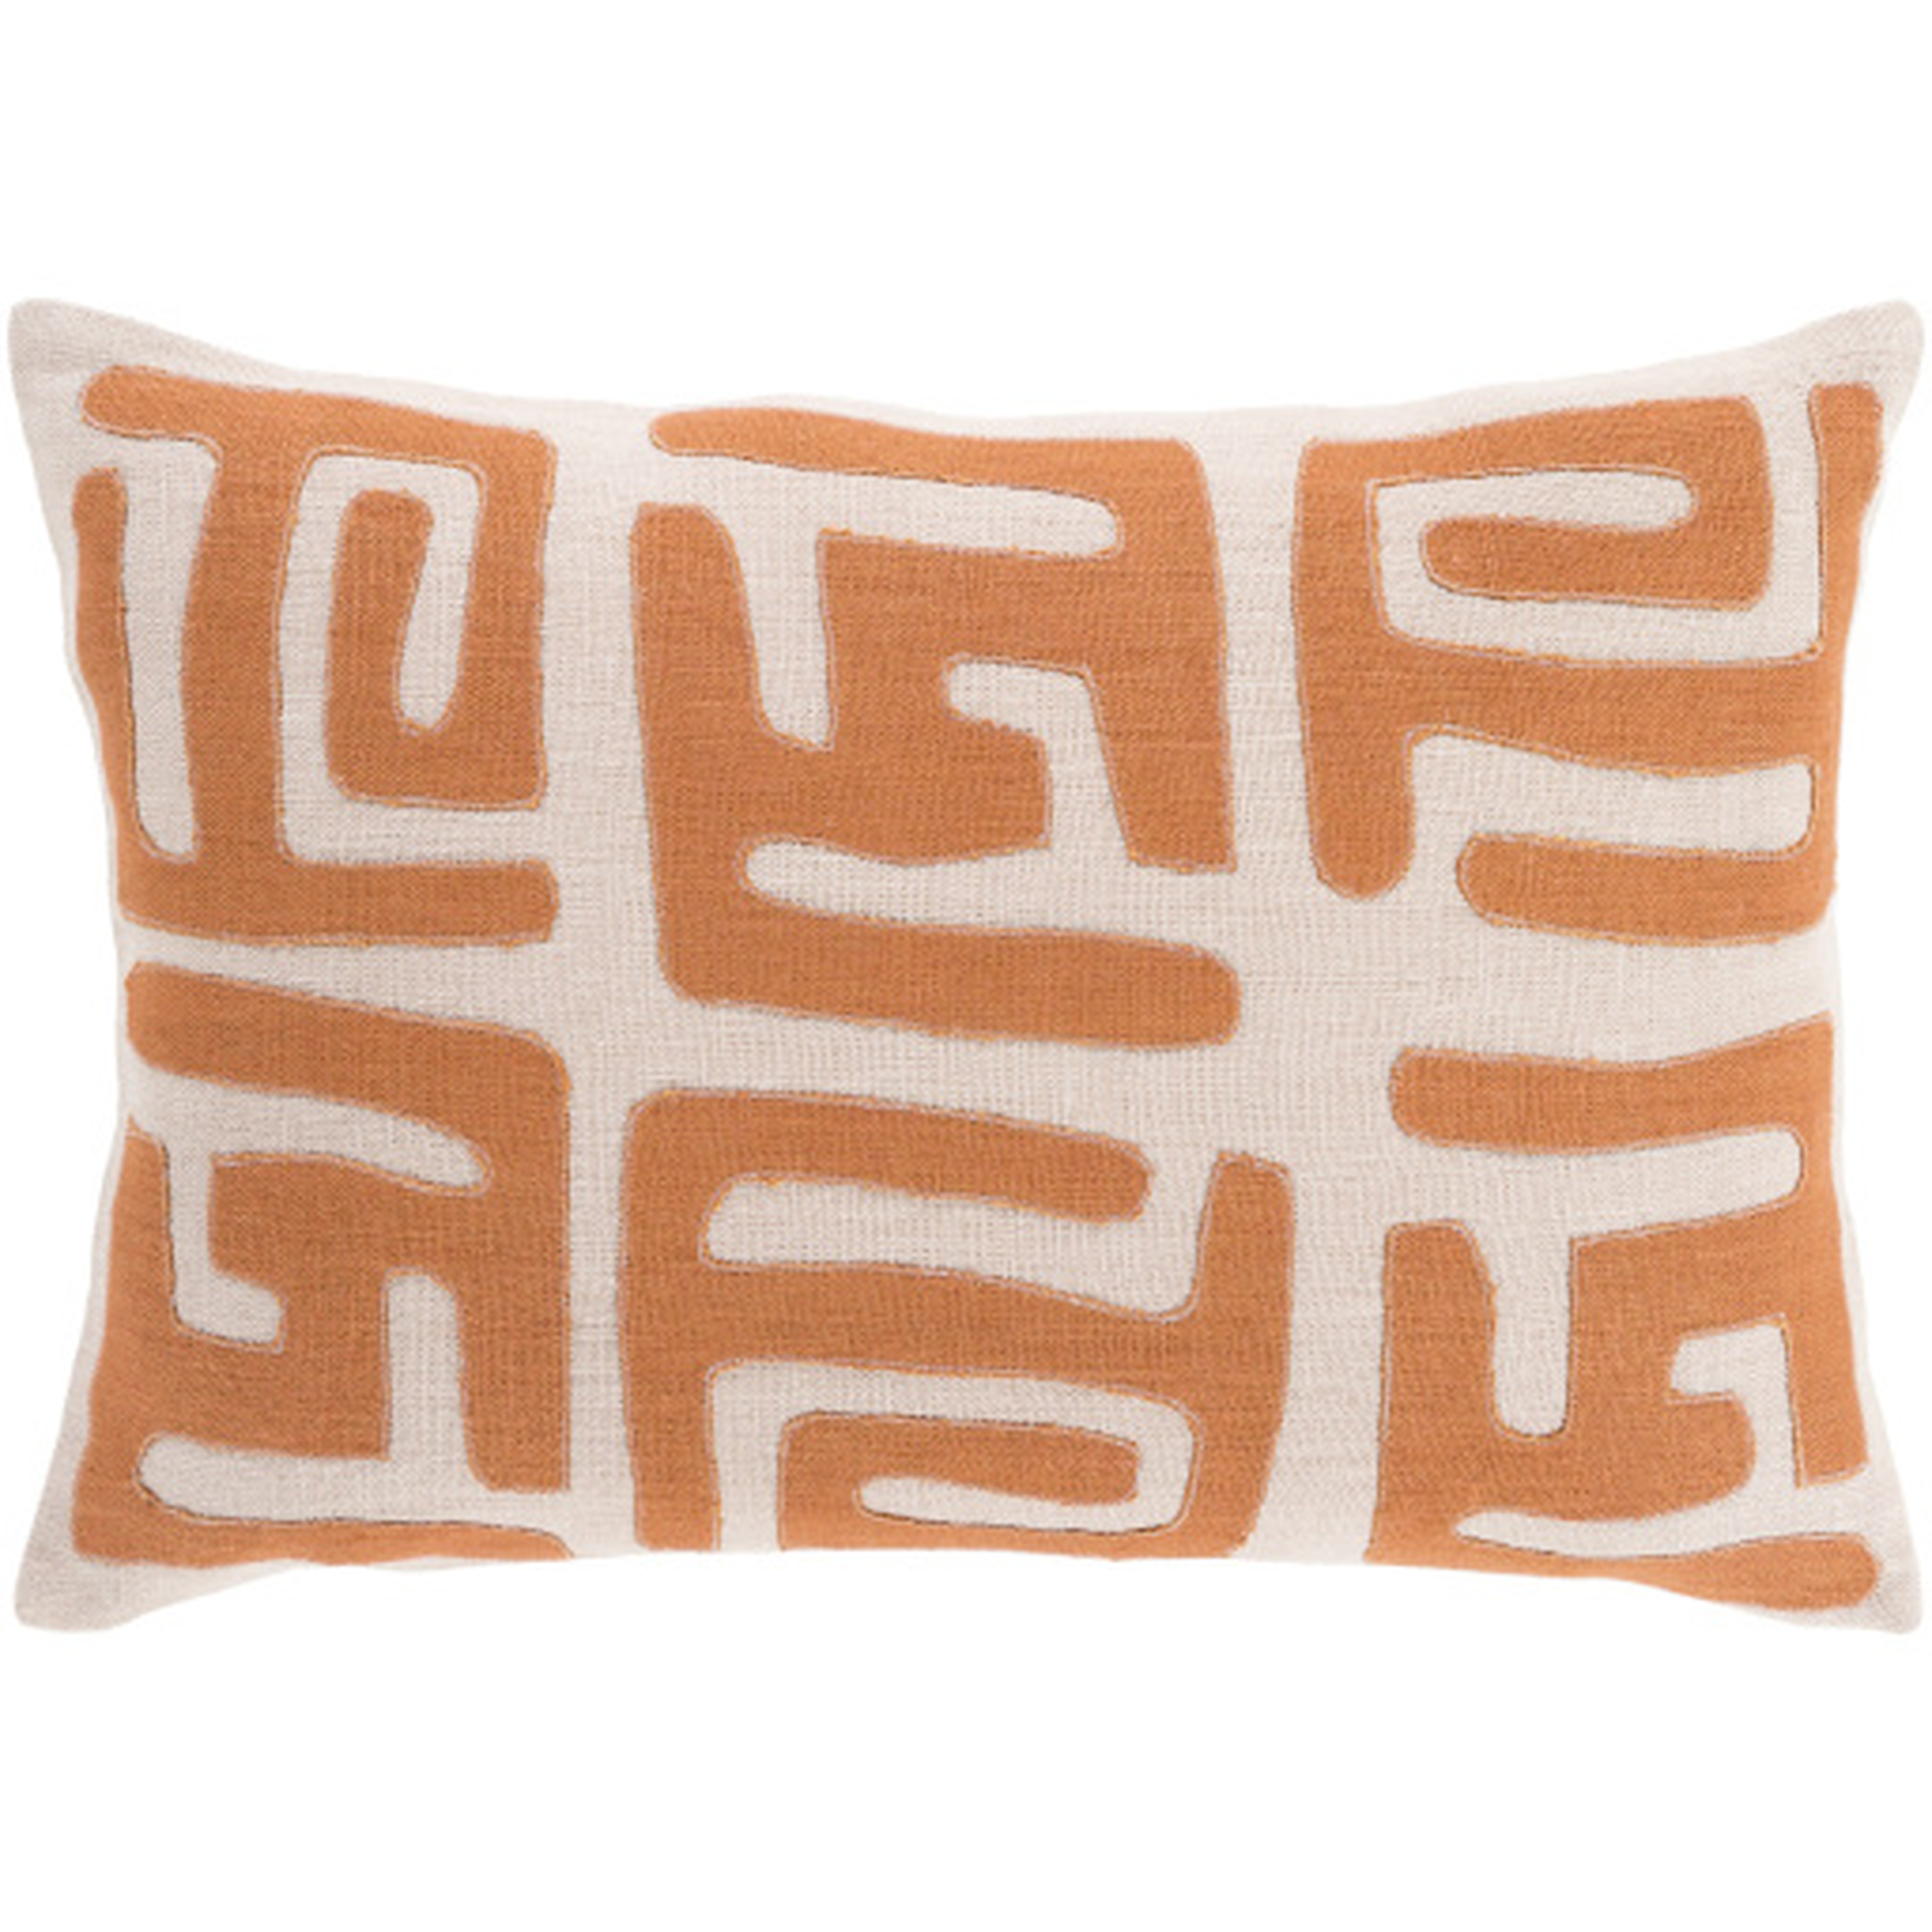 Nairobi Lumbar Pillow Cover, 19" x 13", Orange & Cream - Neva Home